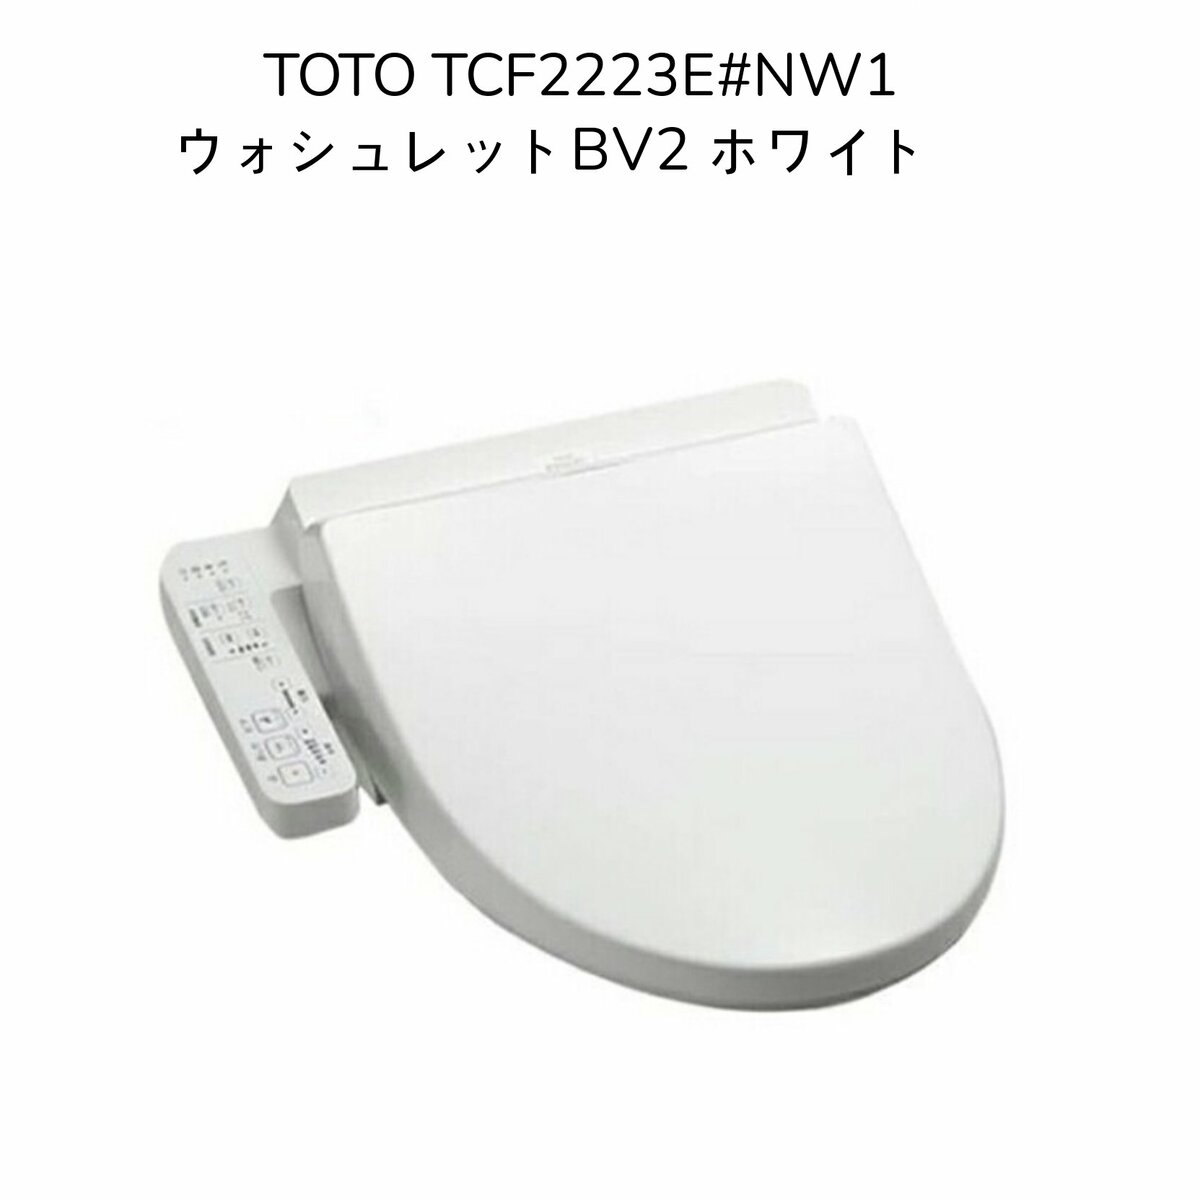 bibi様専用TOTO TCF4733R#NW1 | sweatreno.com